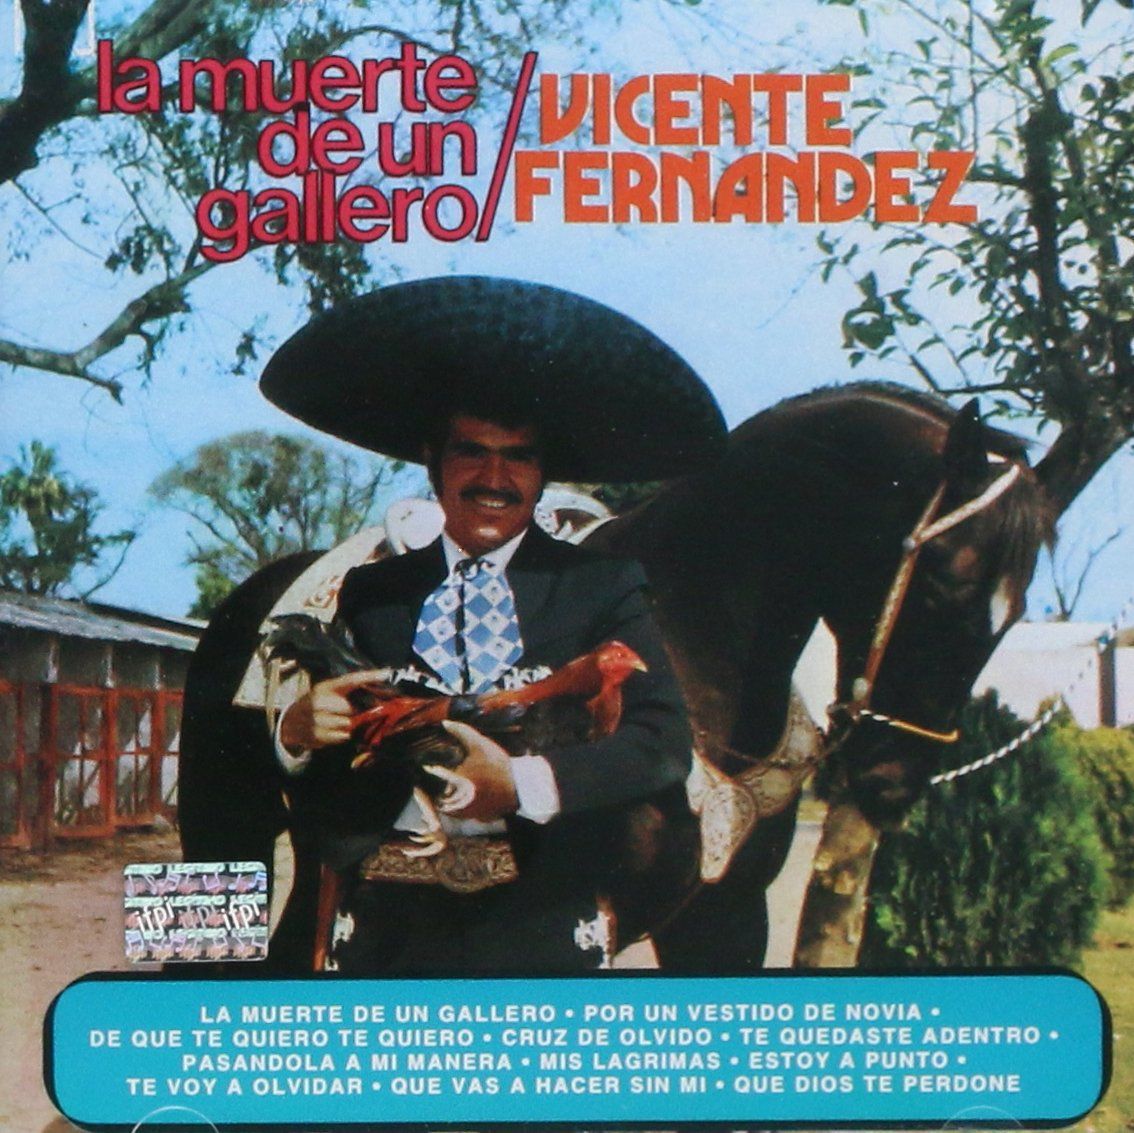 Imagem do álbum La Muerte de Un Gallero do(a) artista Vicente Fernández